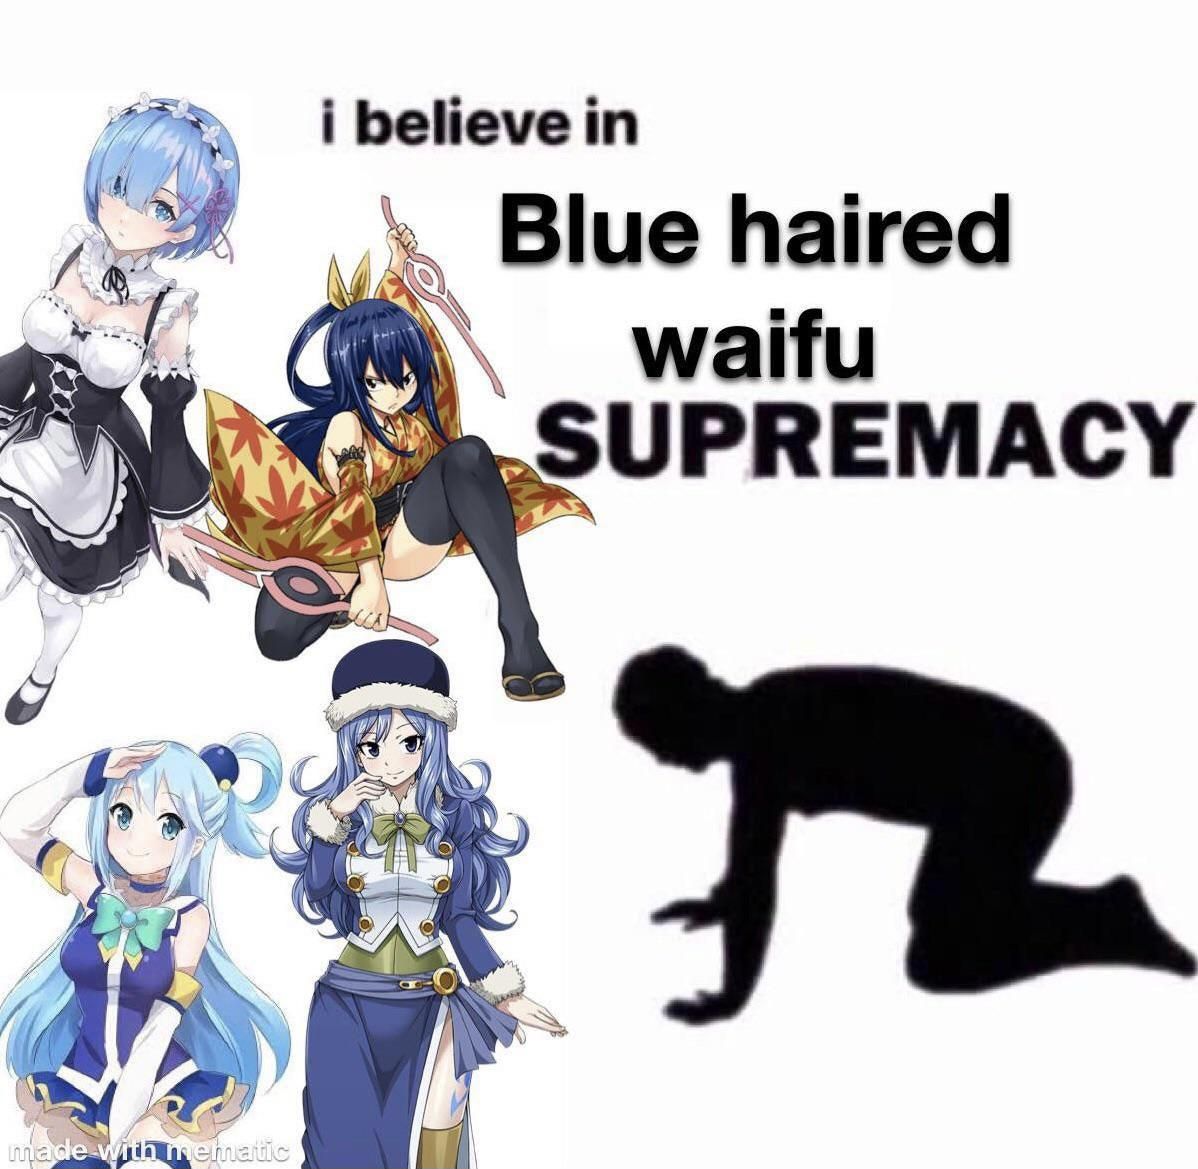 Blue hair fans rise up